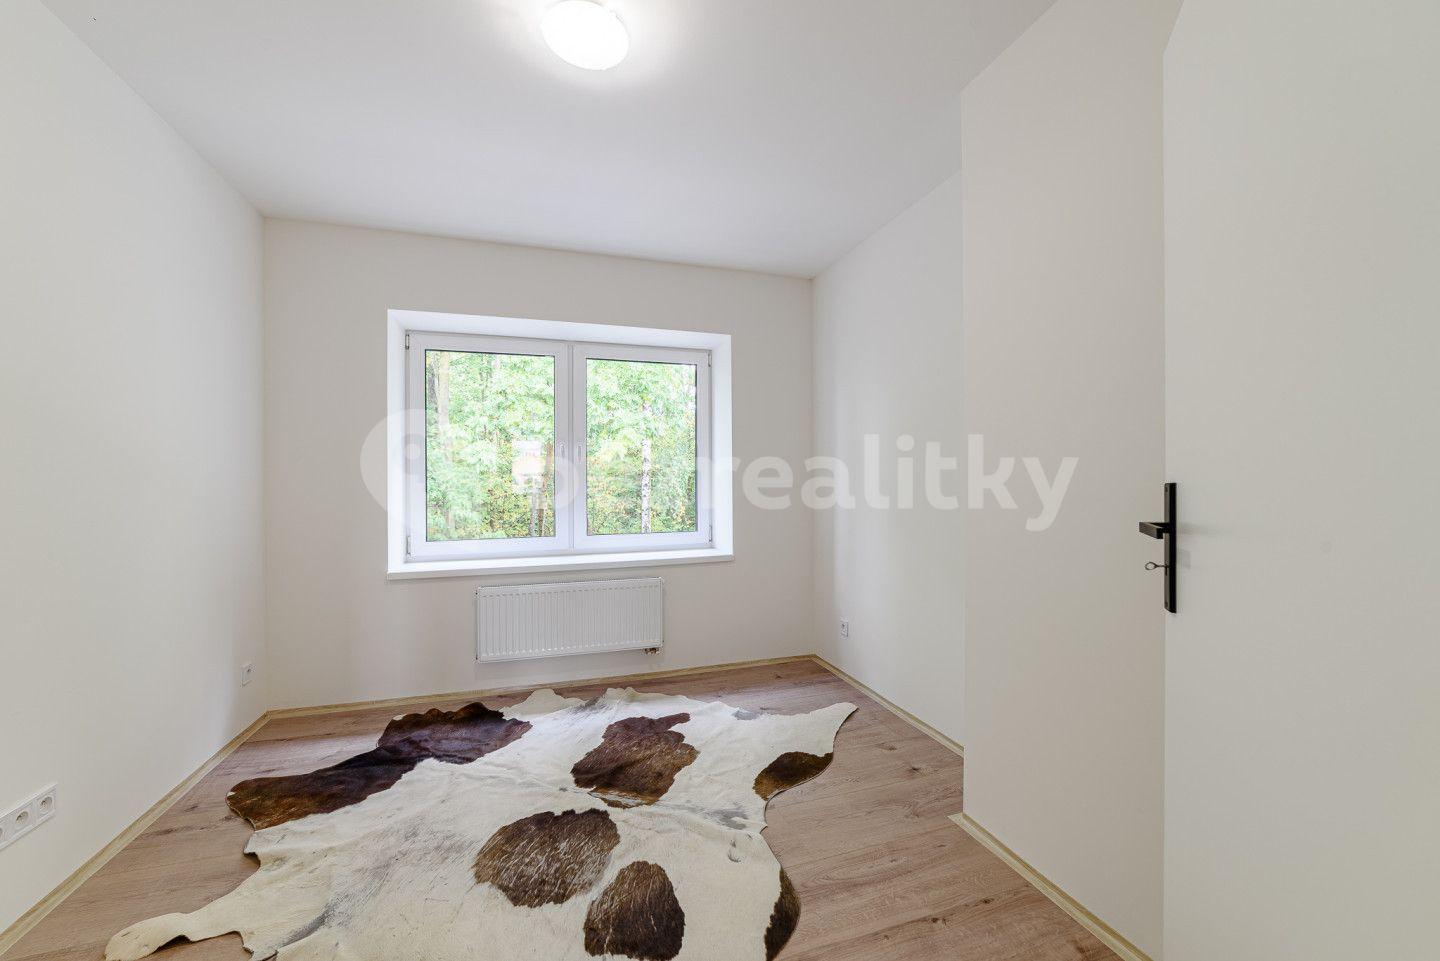 2 bedroom with open-plan kitchen flat for sale, 148 m², Hálkova, Jihlava, Vysočina Region